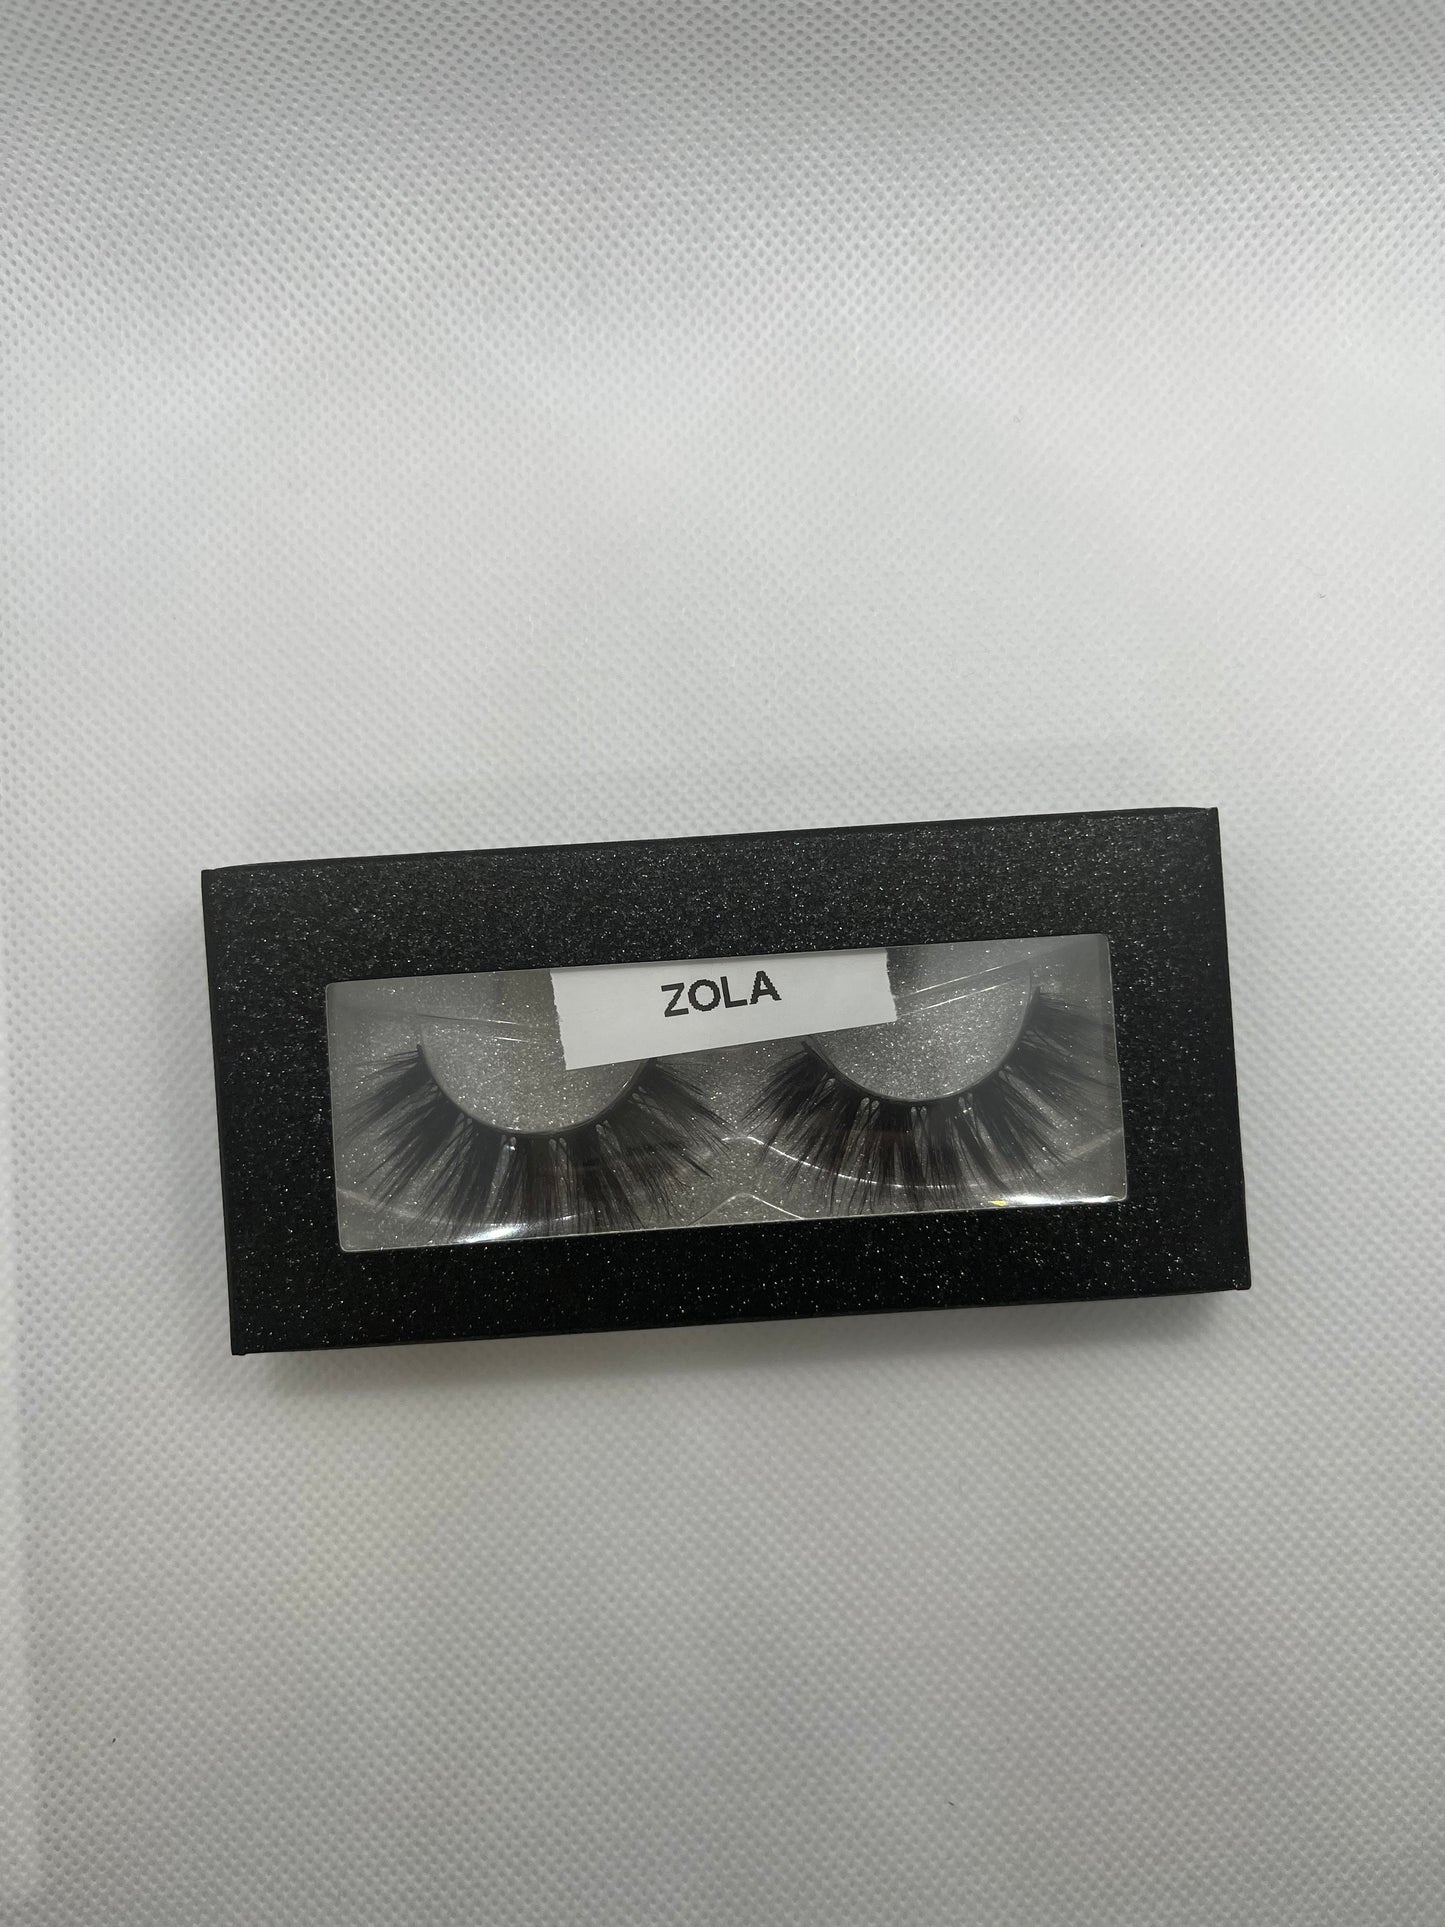 Zola lashes